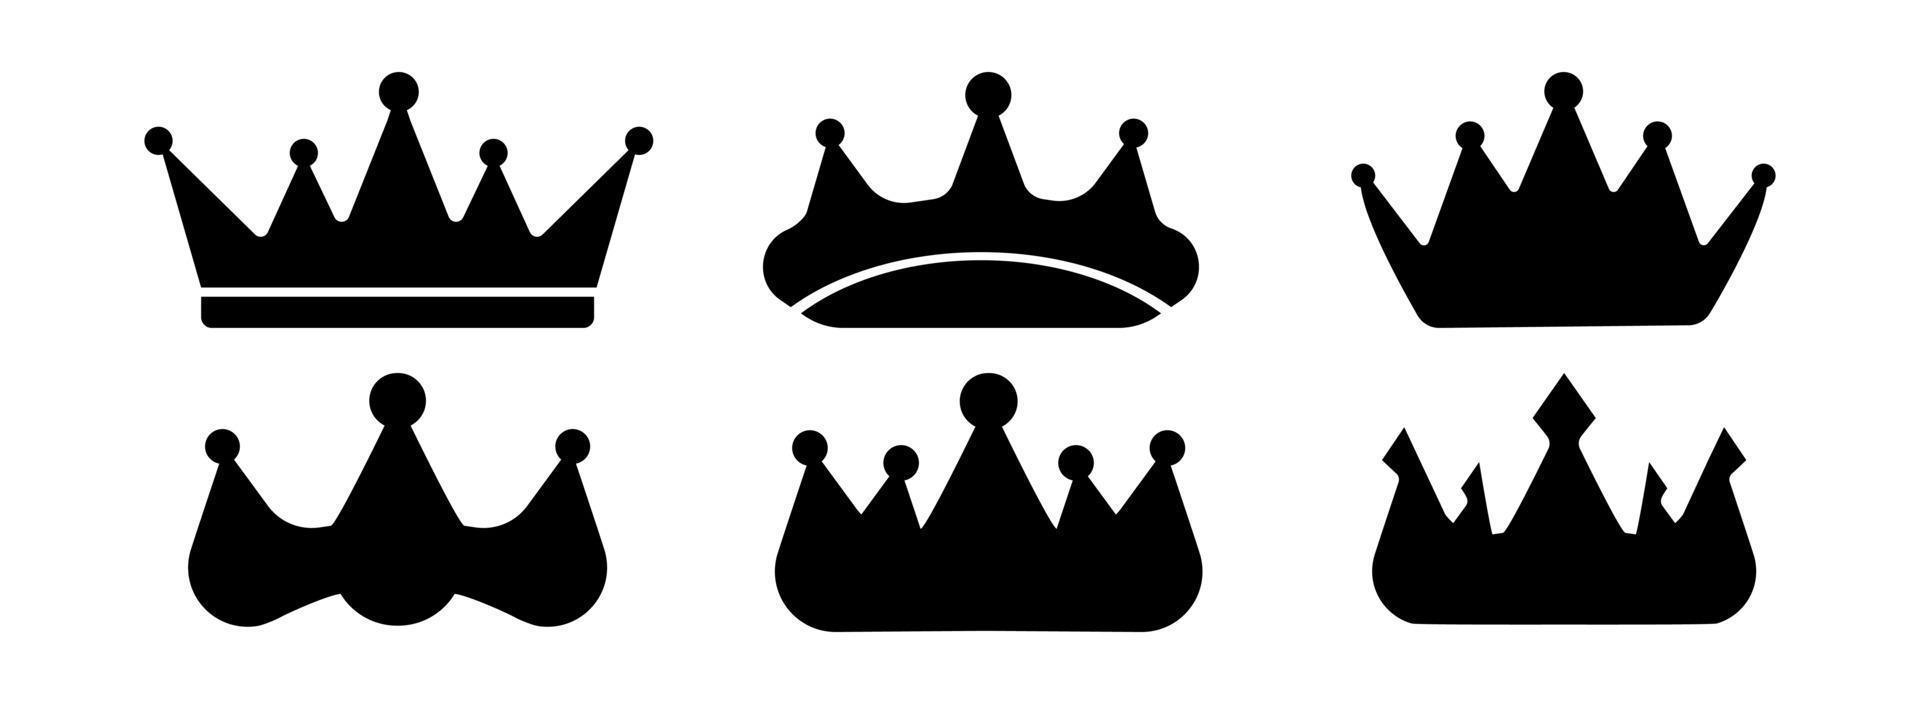 Crown icons. Queen king crowns luxury royal crowning princess tiara heraldic winner award jewel royalty monarch black flat silhouette set. Big Set of vector king crowns icon on white background.